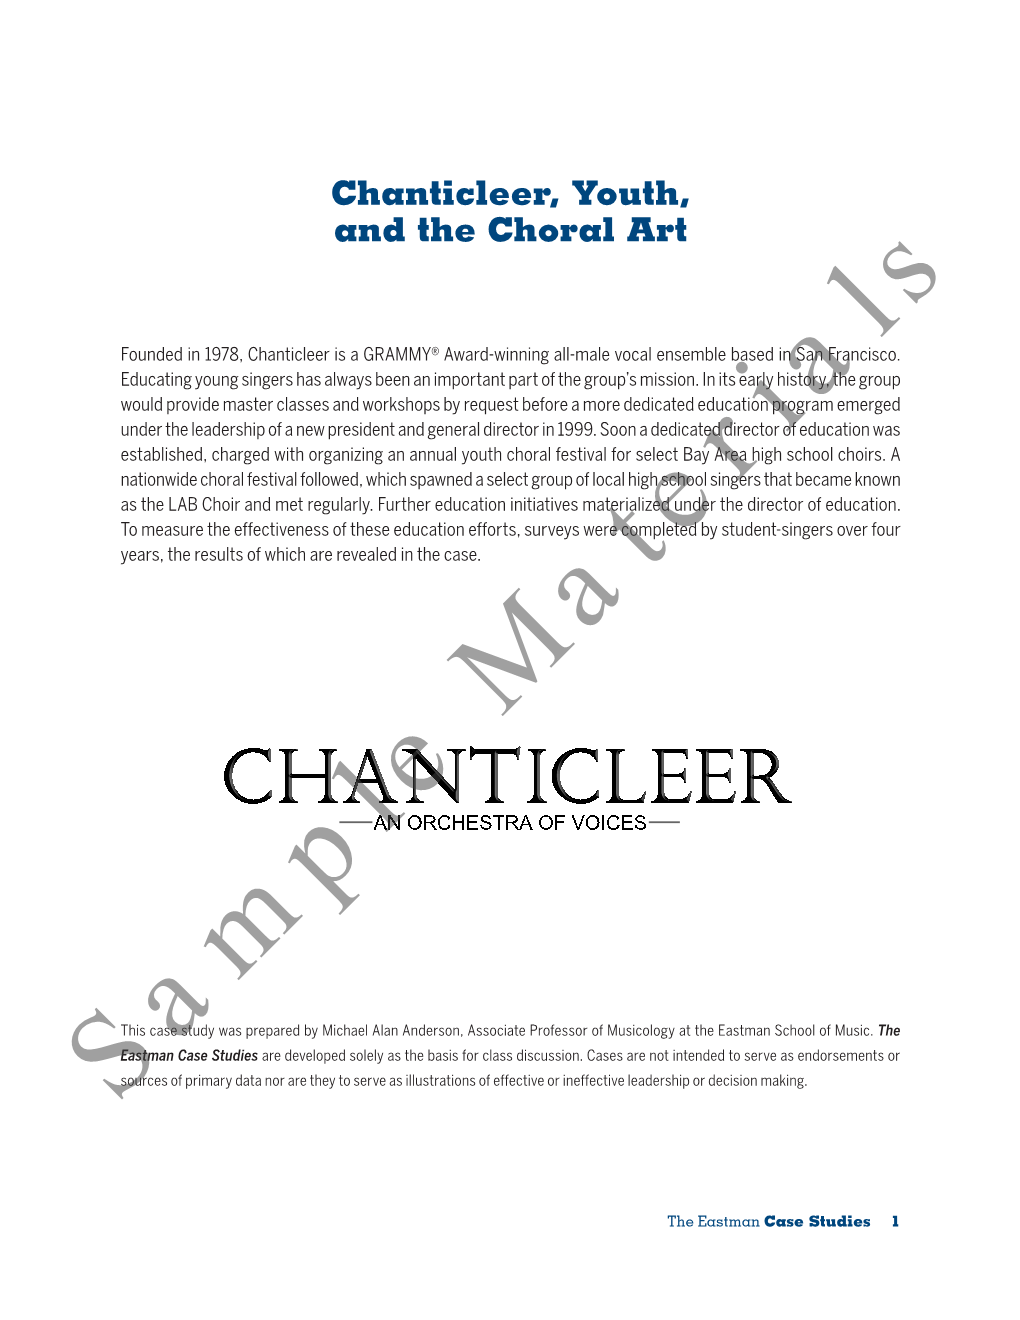 Chanticleer Case Study Sample